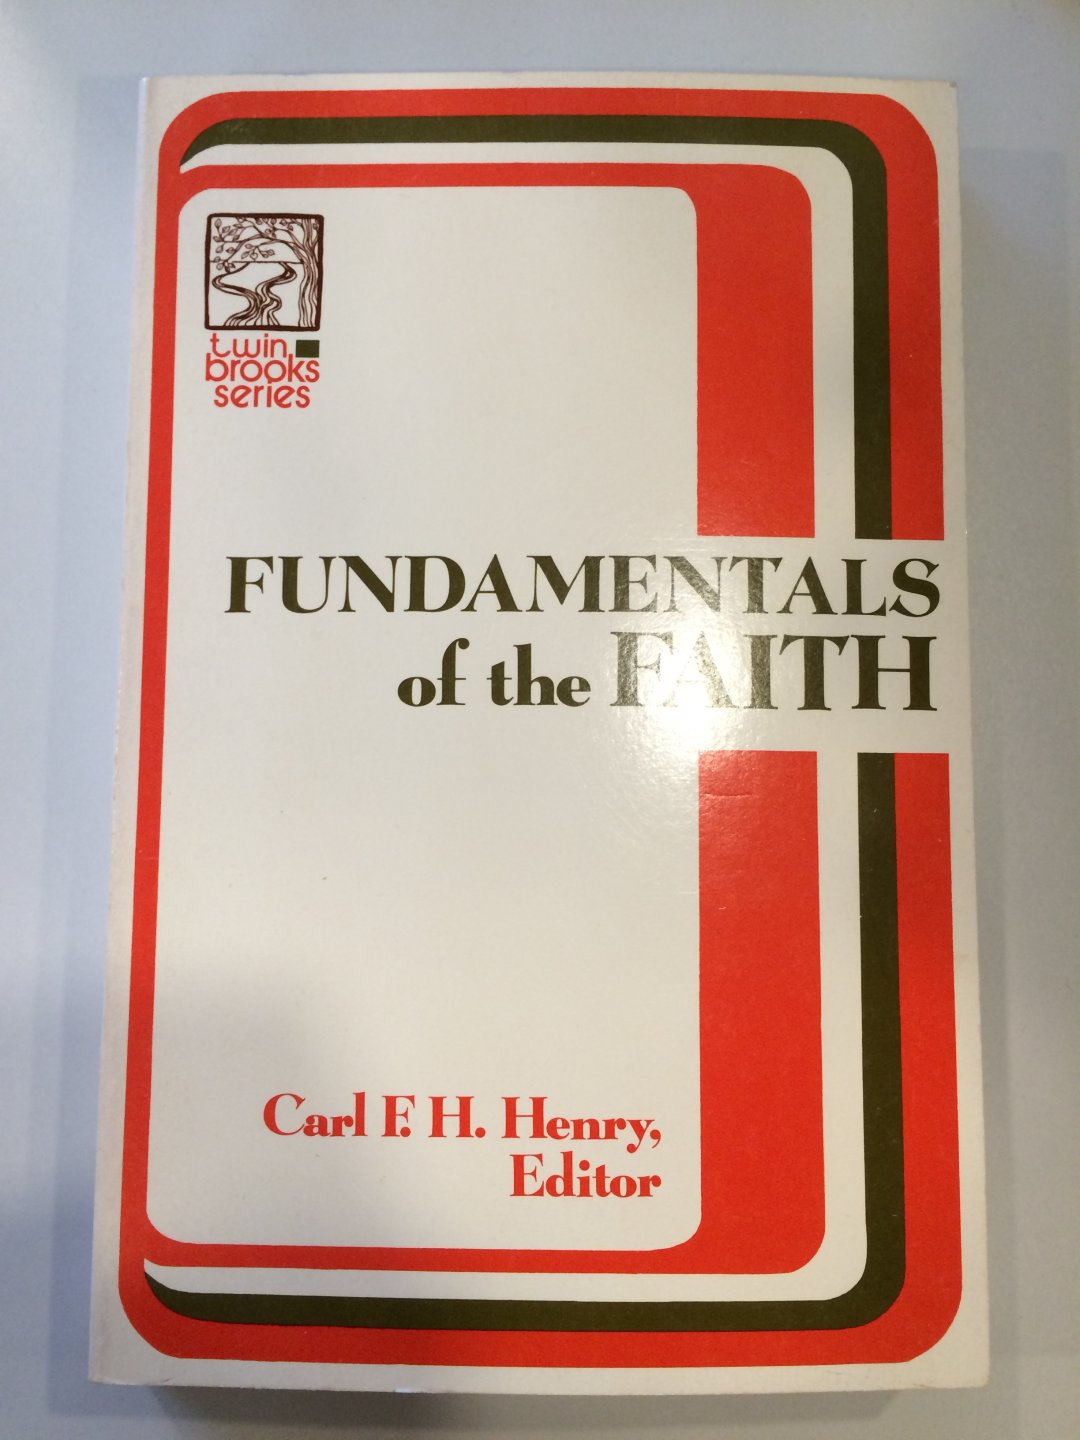 Henry. Carl F. H. - Fundamentals of the faith